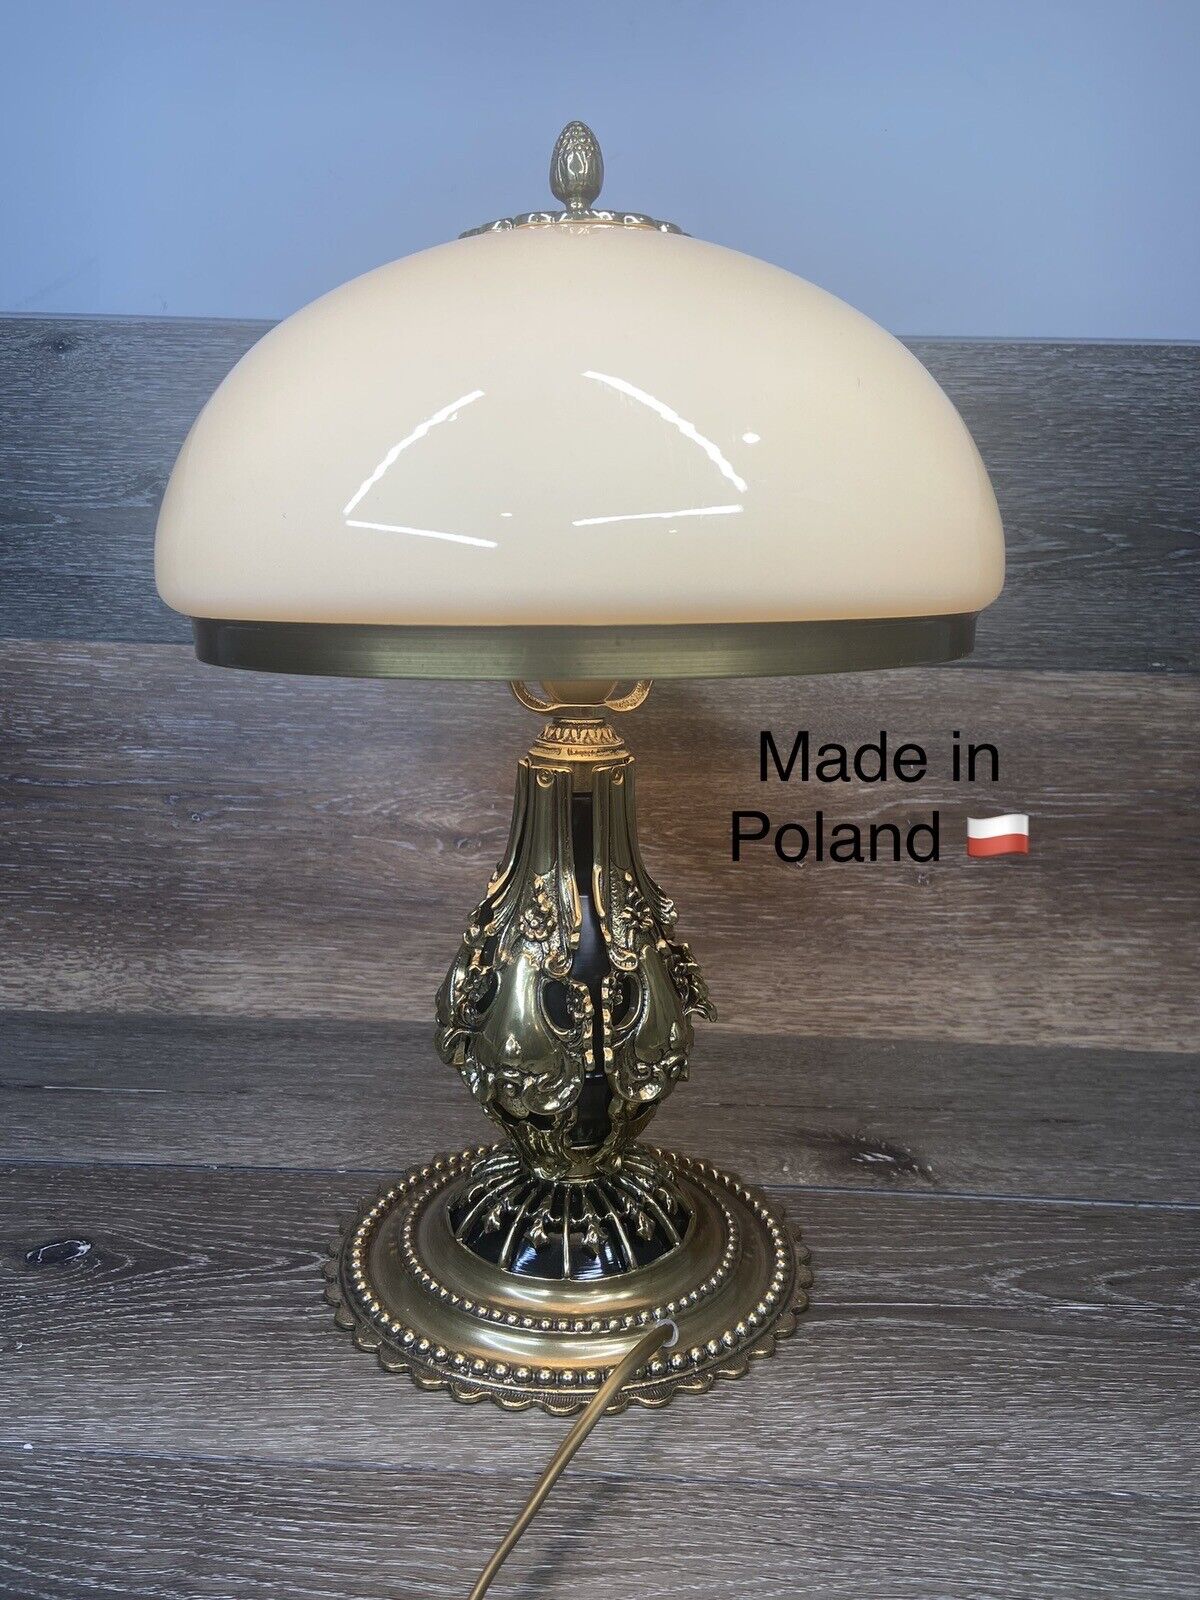 Art Deco Lamp Ornate Gold Gilded Polished Brass Mashroom Glass Shade 17.5” Tall